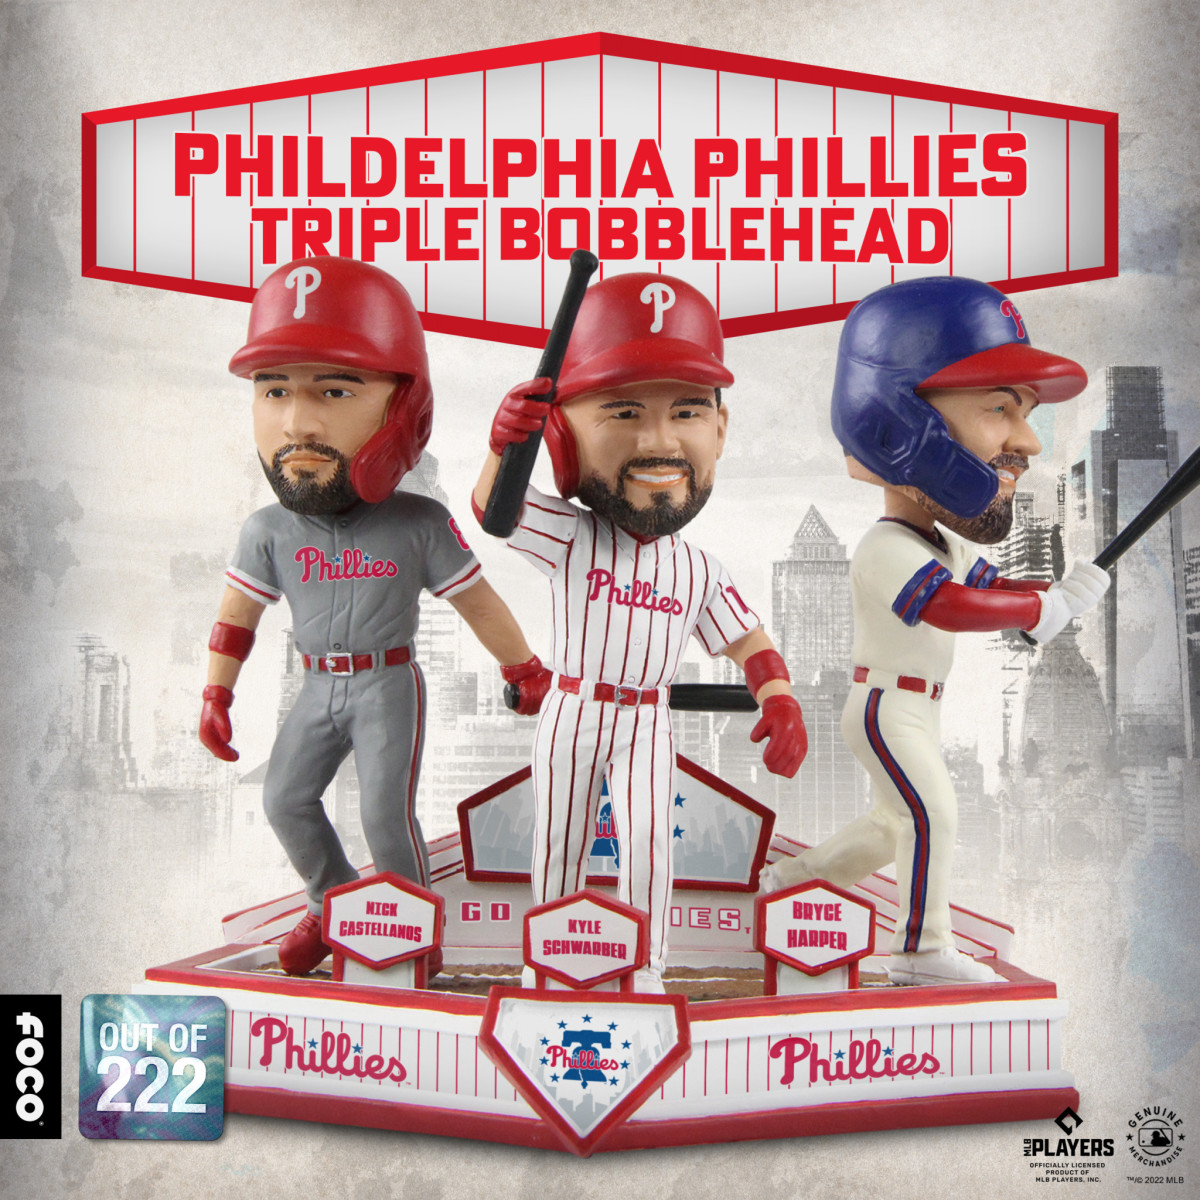 Phillies Triple Bobblehead